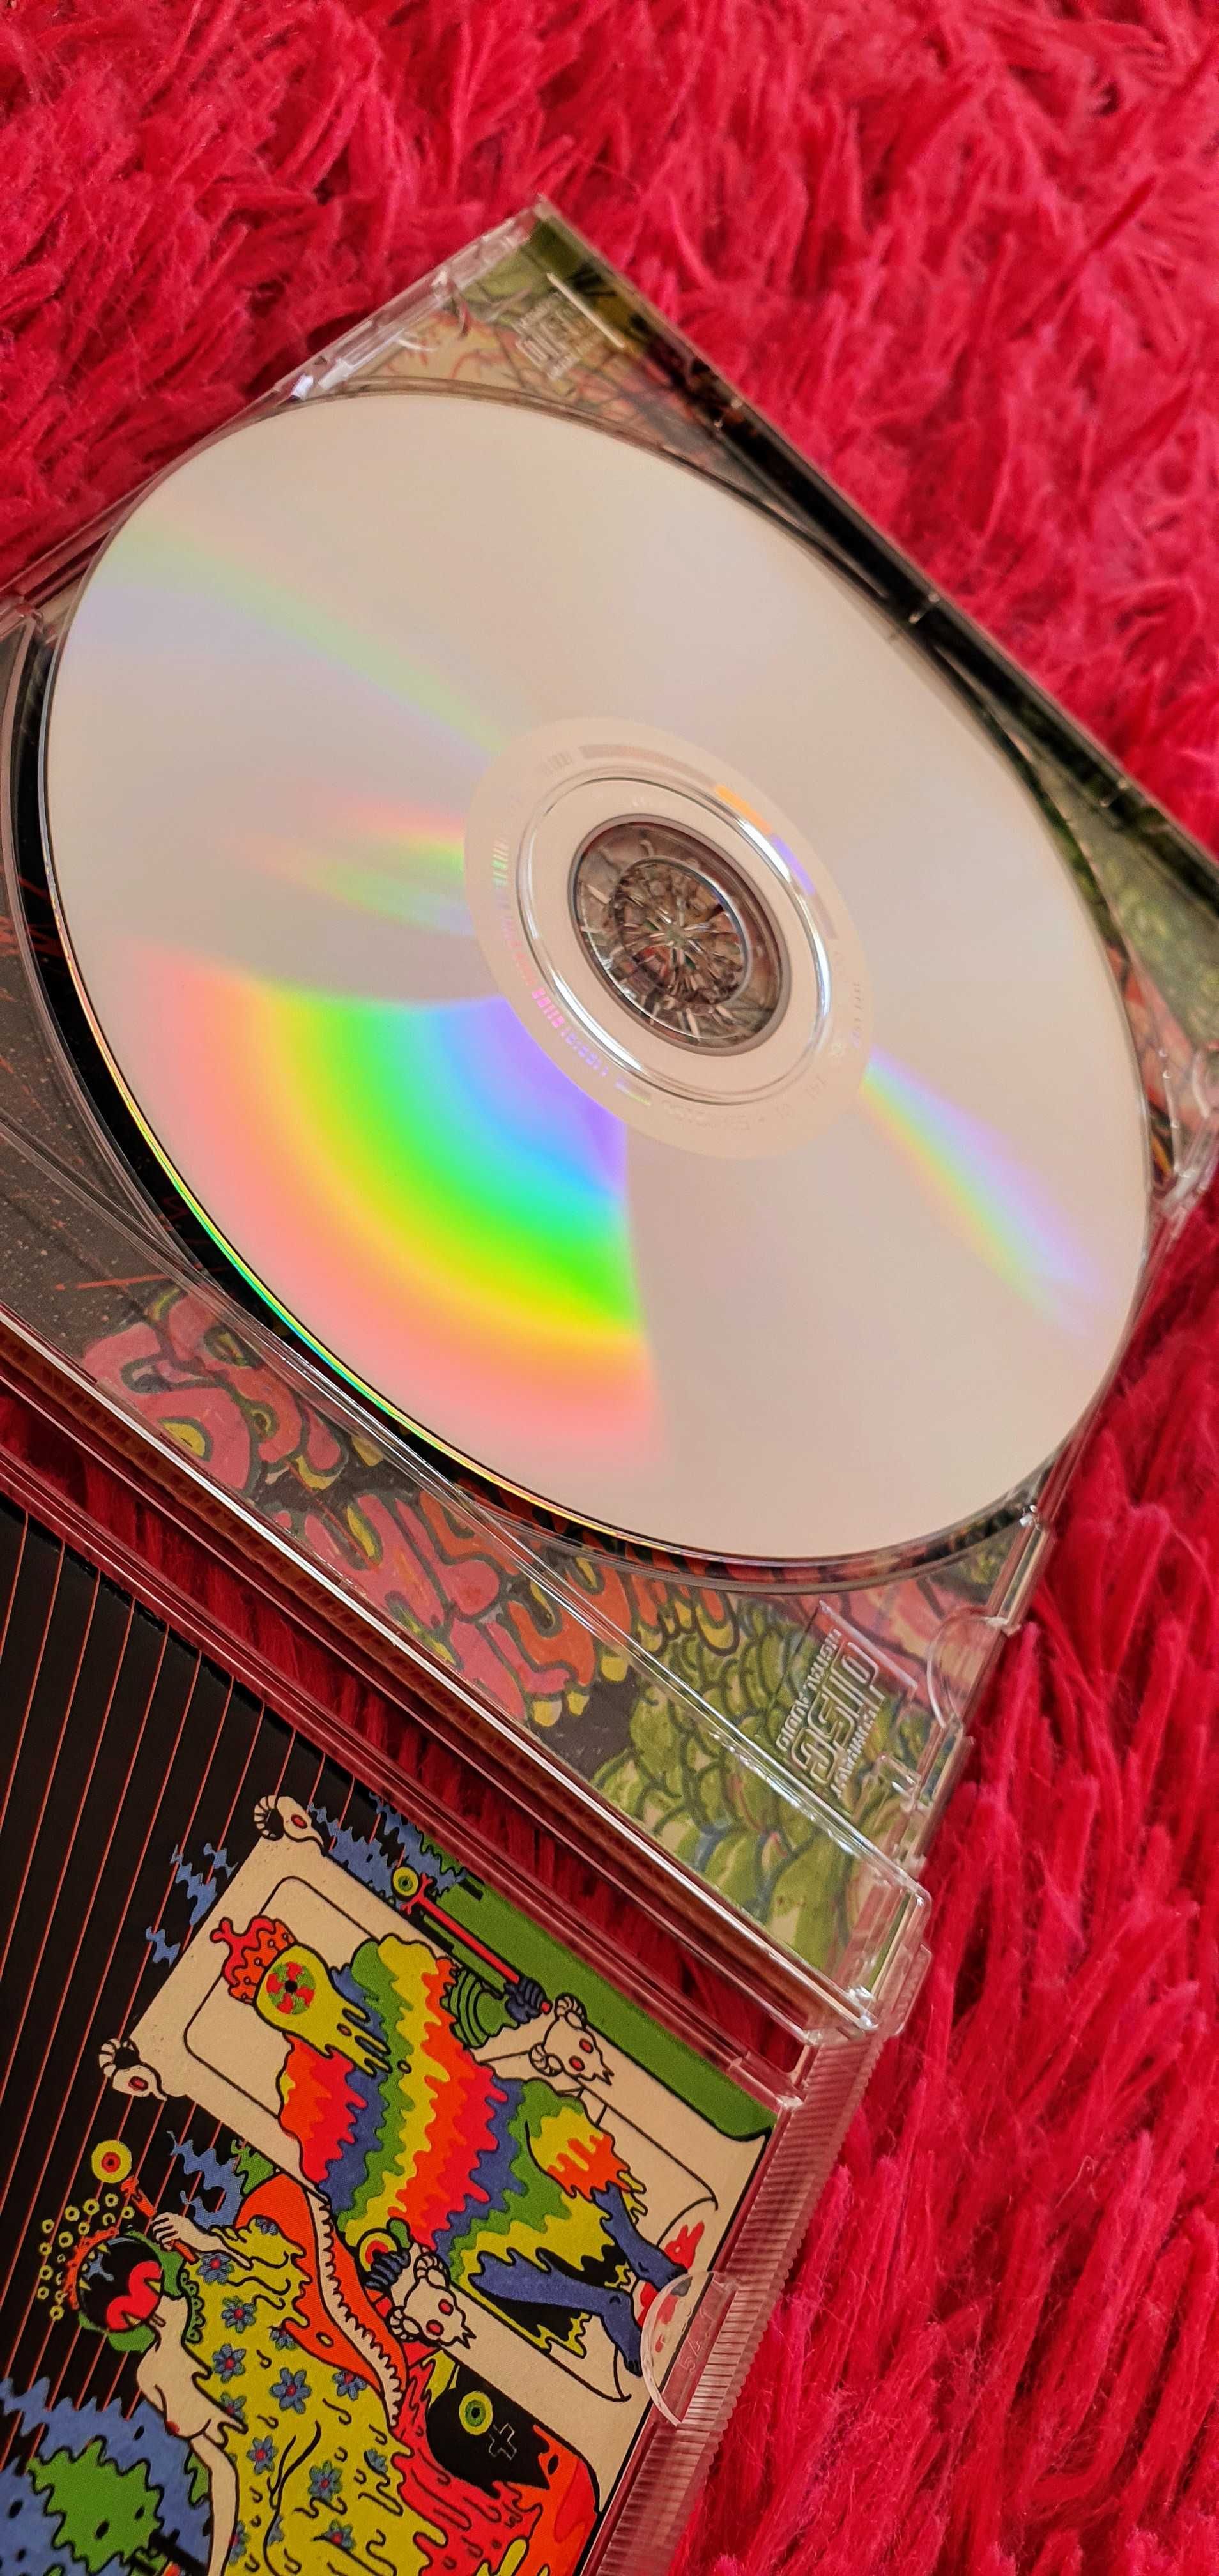 Zestaw The Flaming Lips 3 x CD jewel case